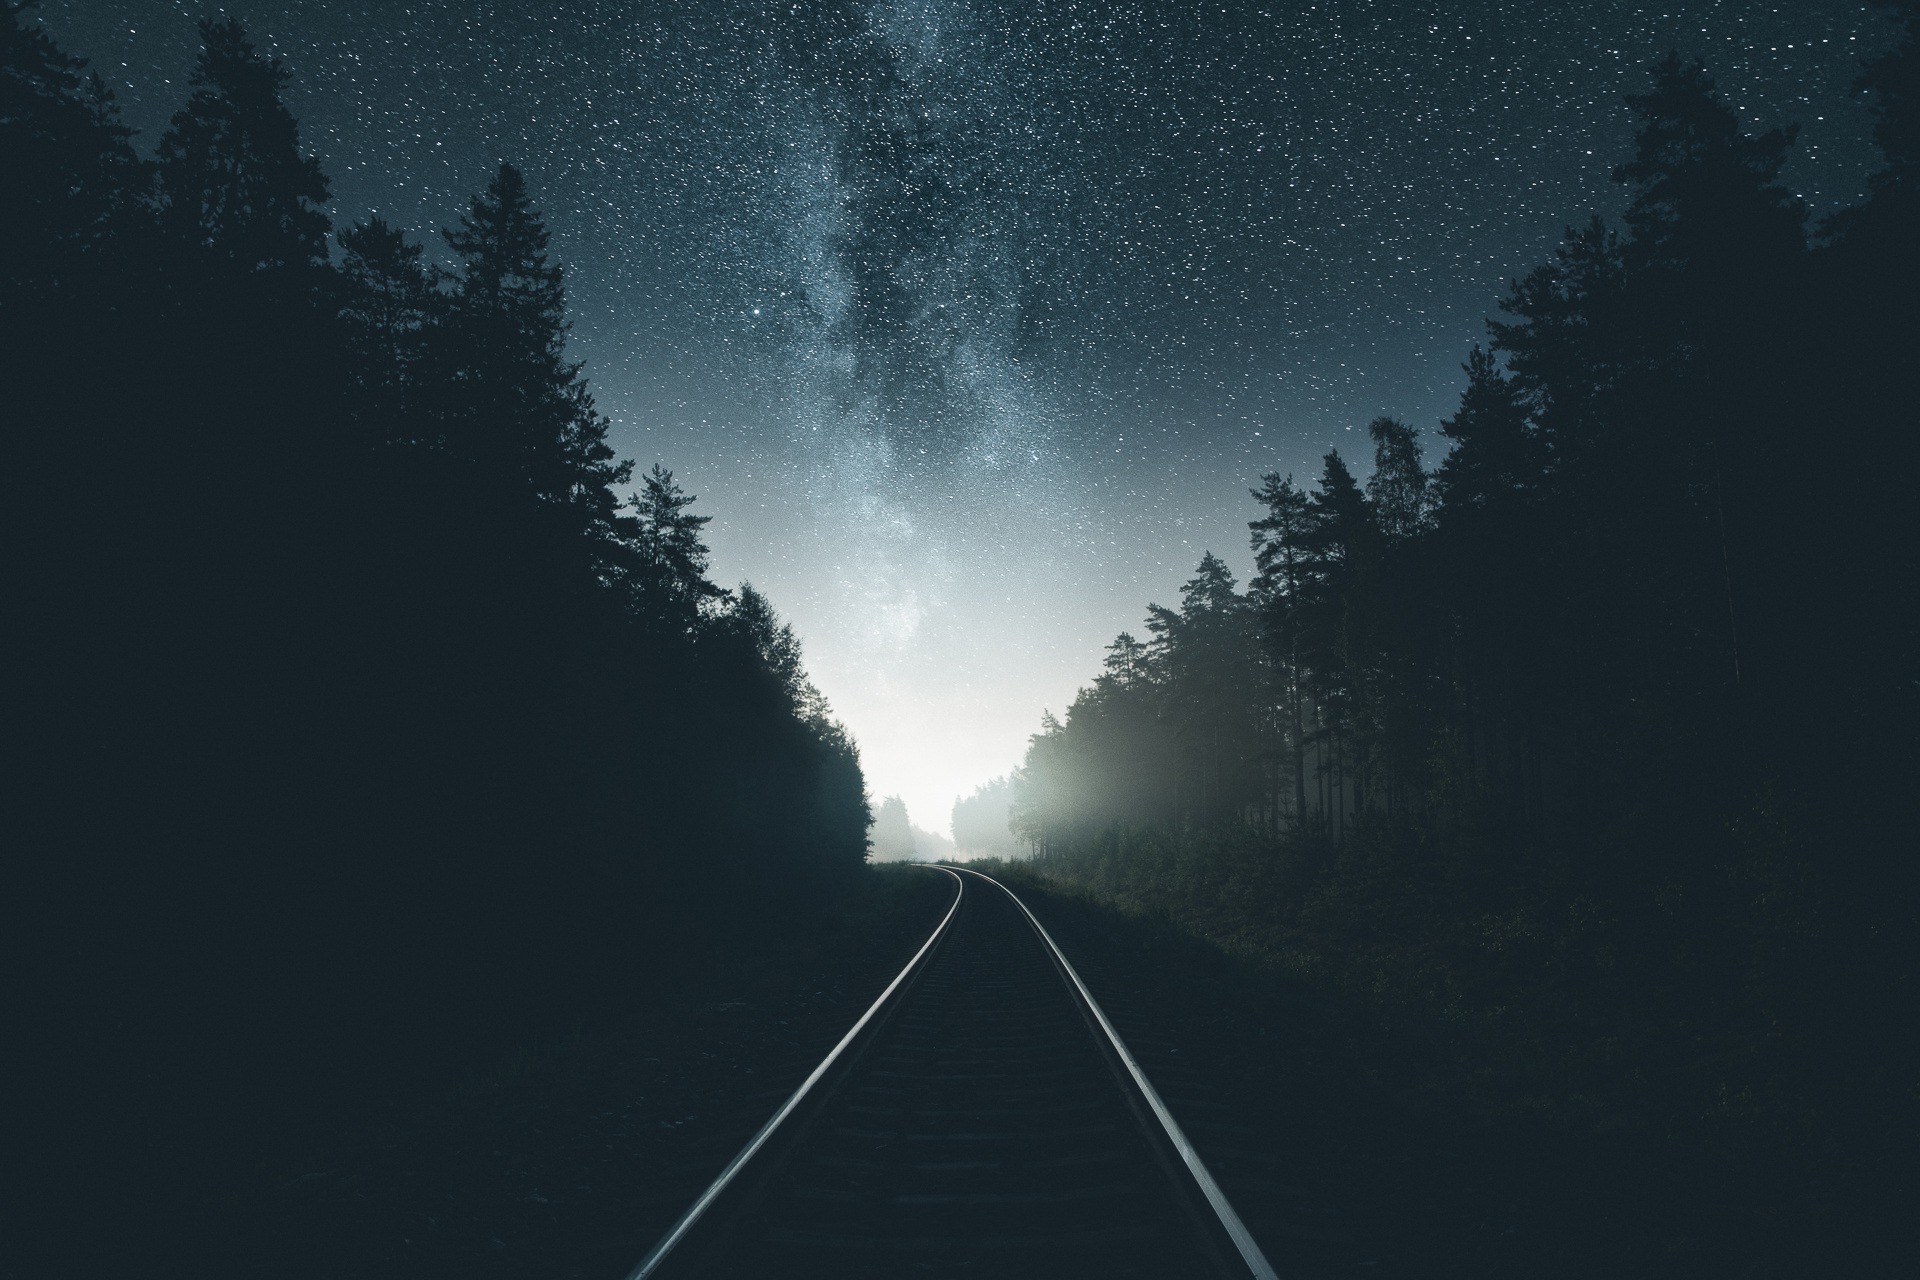 Image: Night, railroad, sky, stars, milky way, light, forest